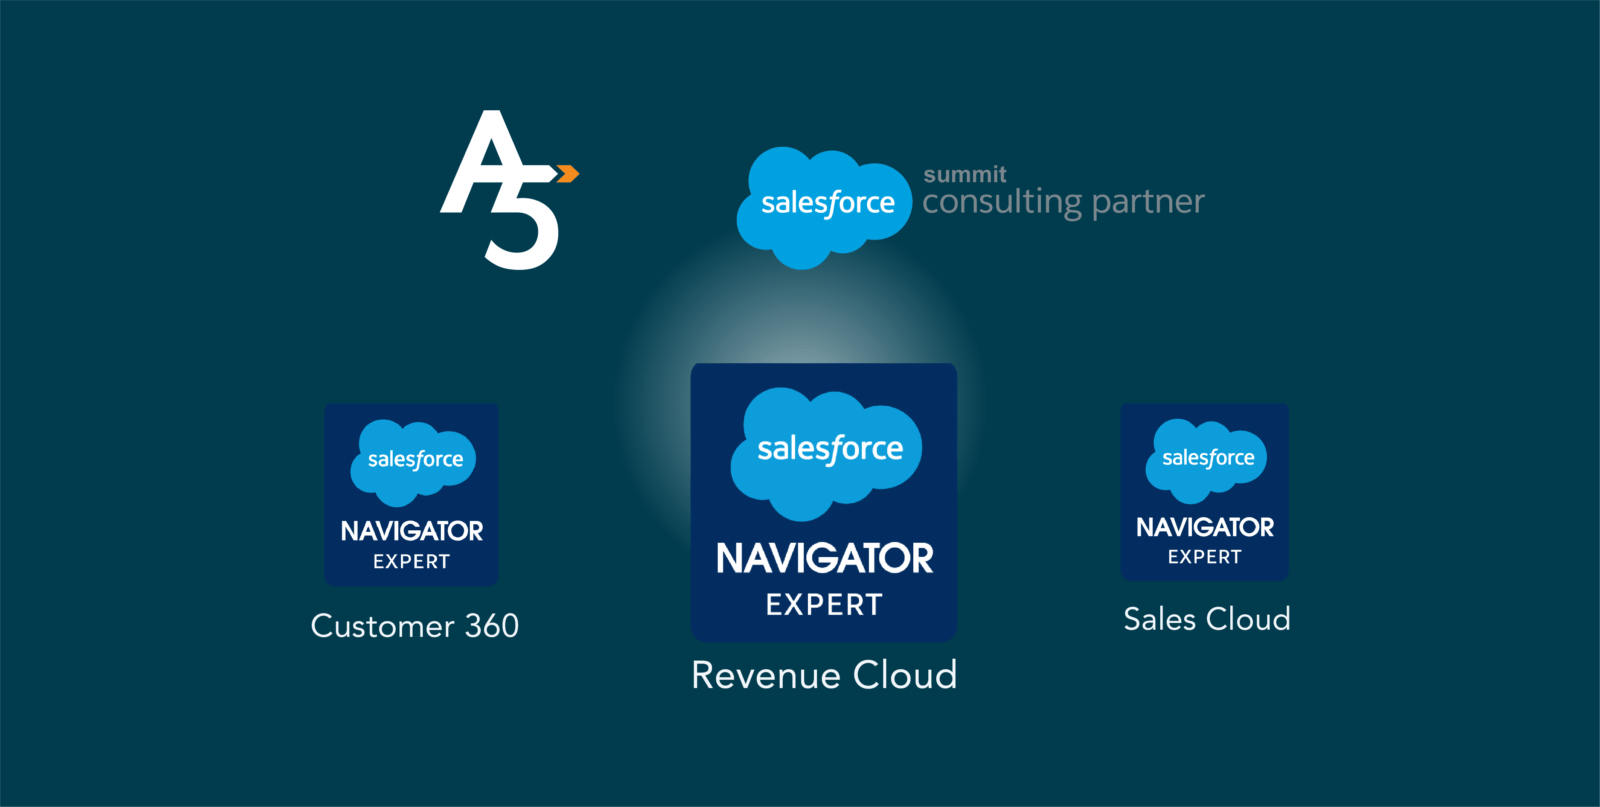 A5 Achieves Expert Navigator Status For Salesforce Revenue Cloud